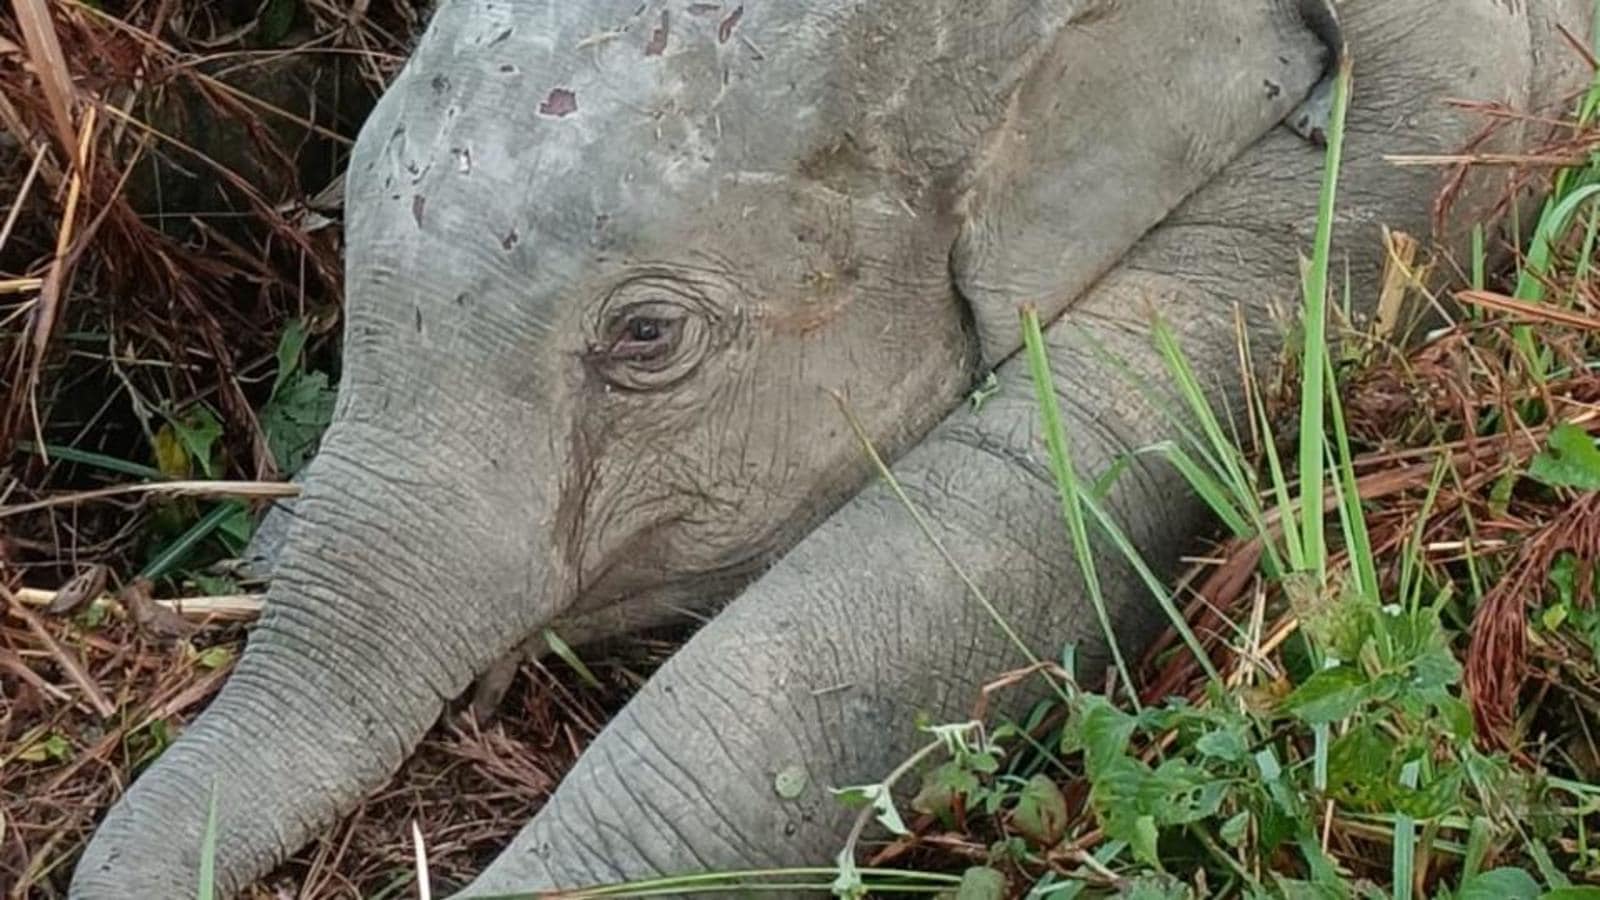 13 people held for killing elephant calf in Chhattisgarh